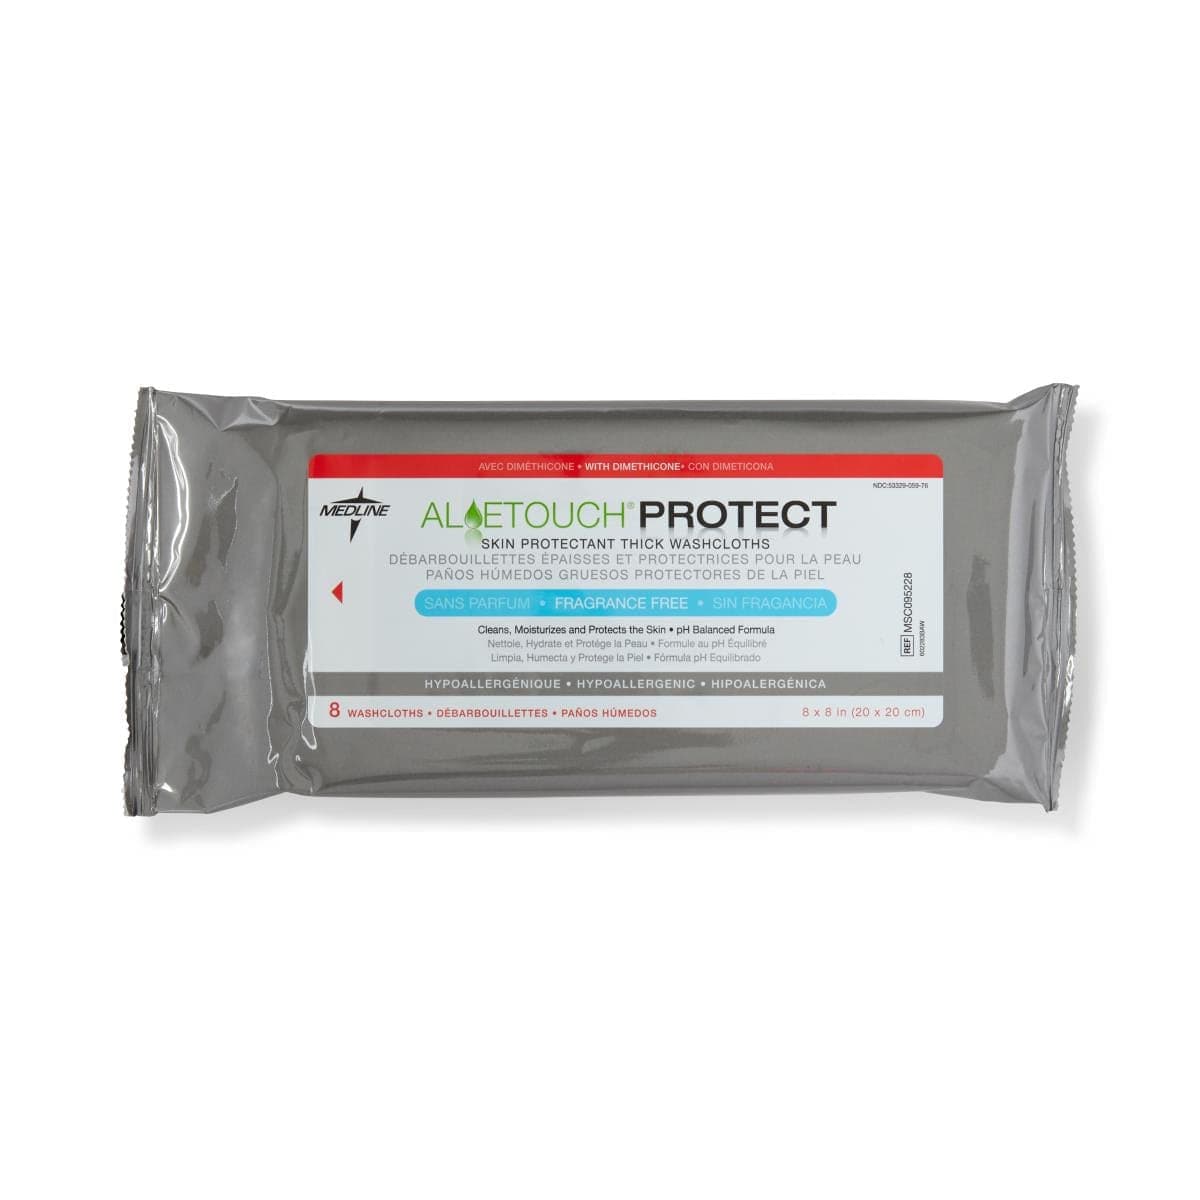 Medline 8/PK / Case of 30 Packs Medline AloeTouch PROTECT Dimethicone Skin Protectant Wipes